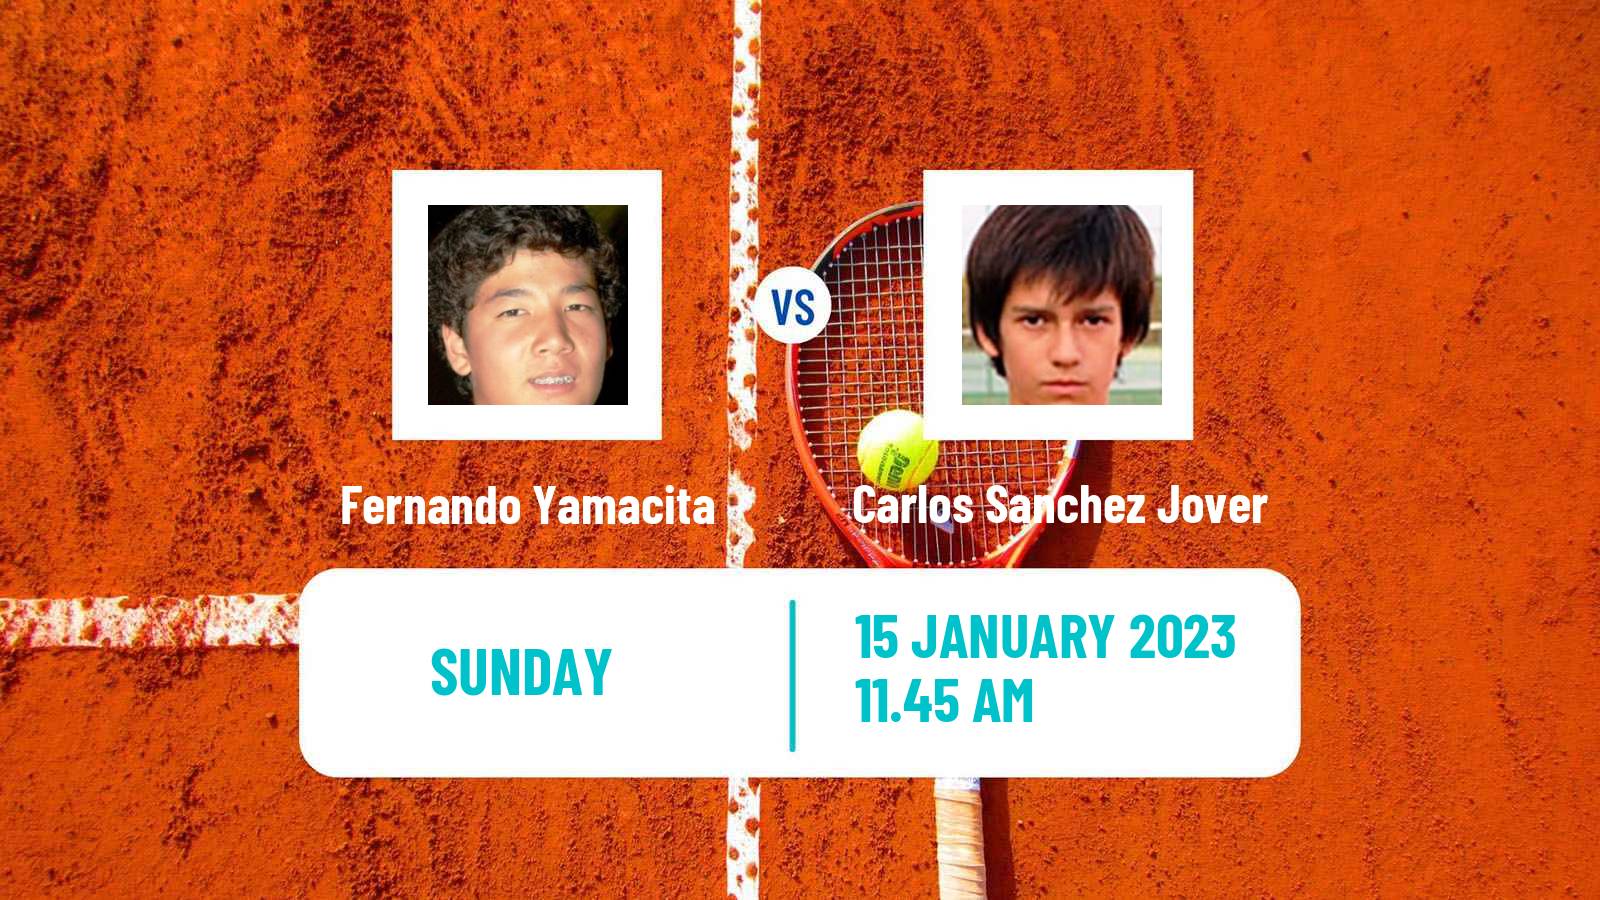 Tennis ATP Challenger Fernando Yamacita - Carlos Sanchez Jover